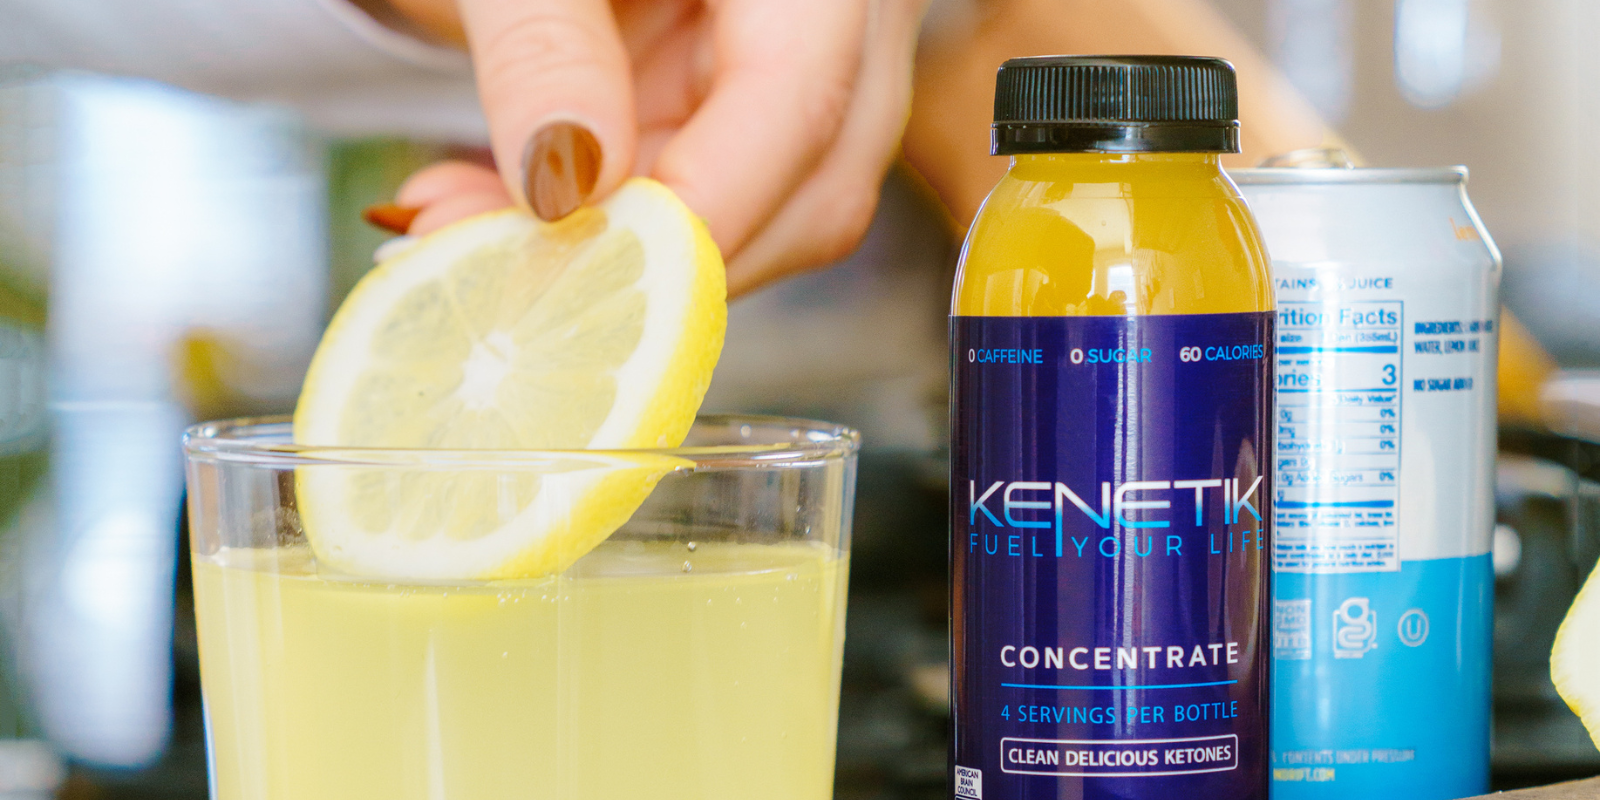 Top 3 Kenetik Ketone Brain Fuel Drink Recipes